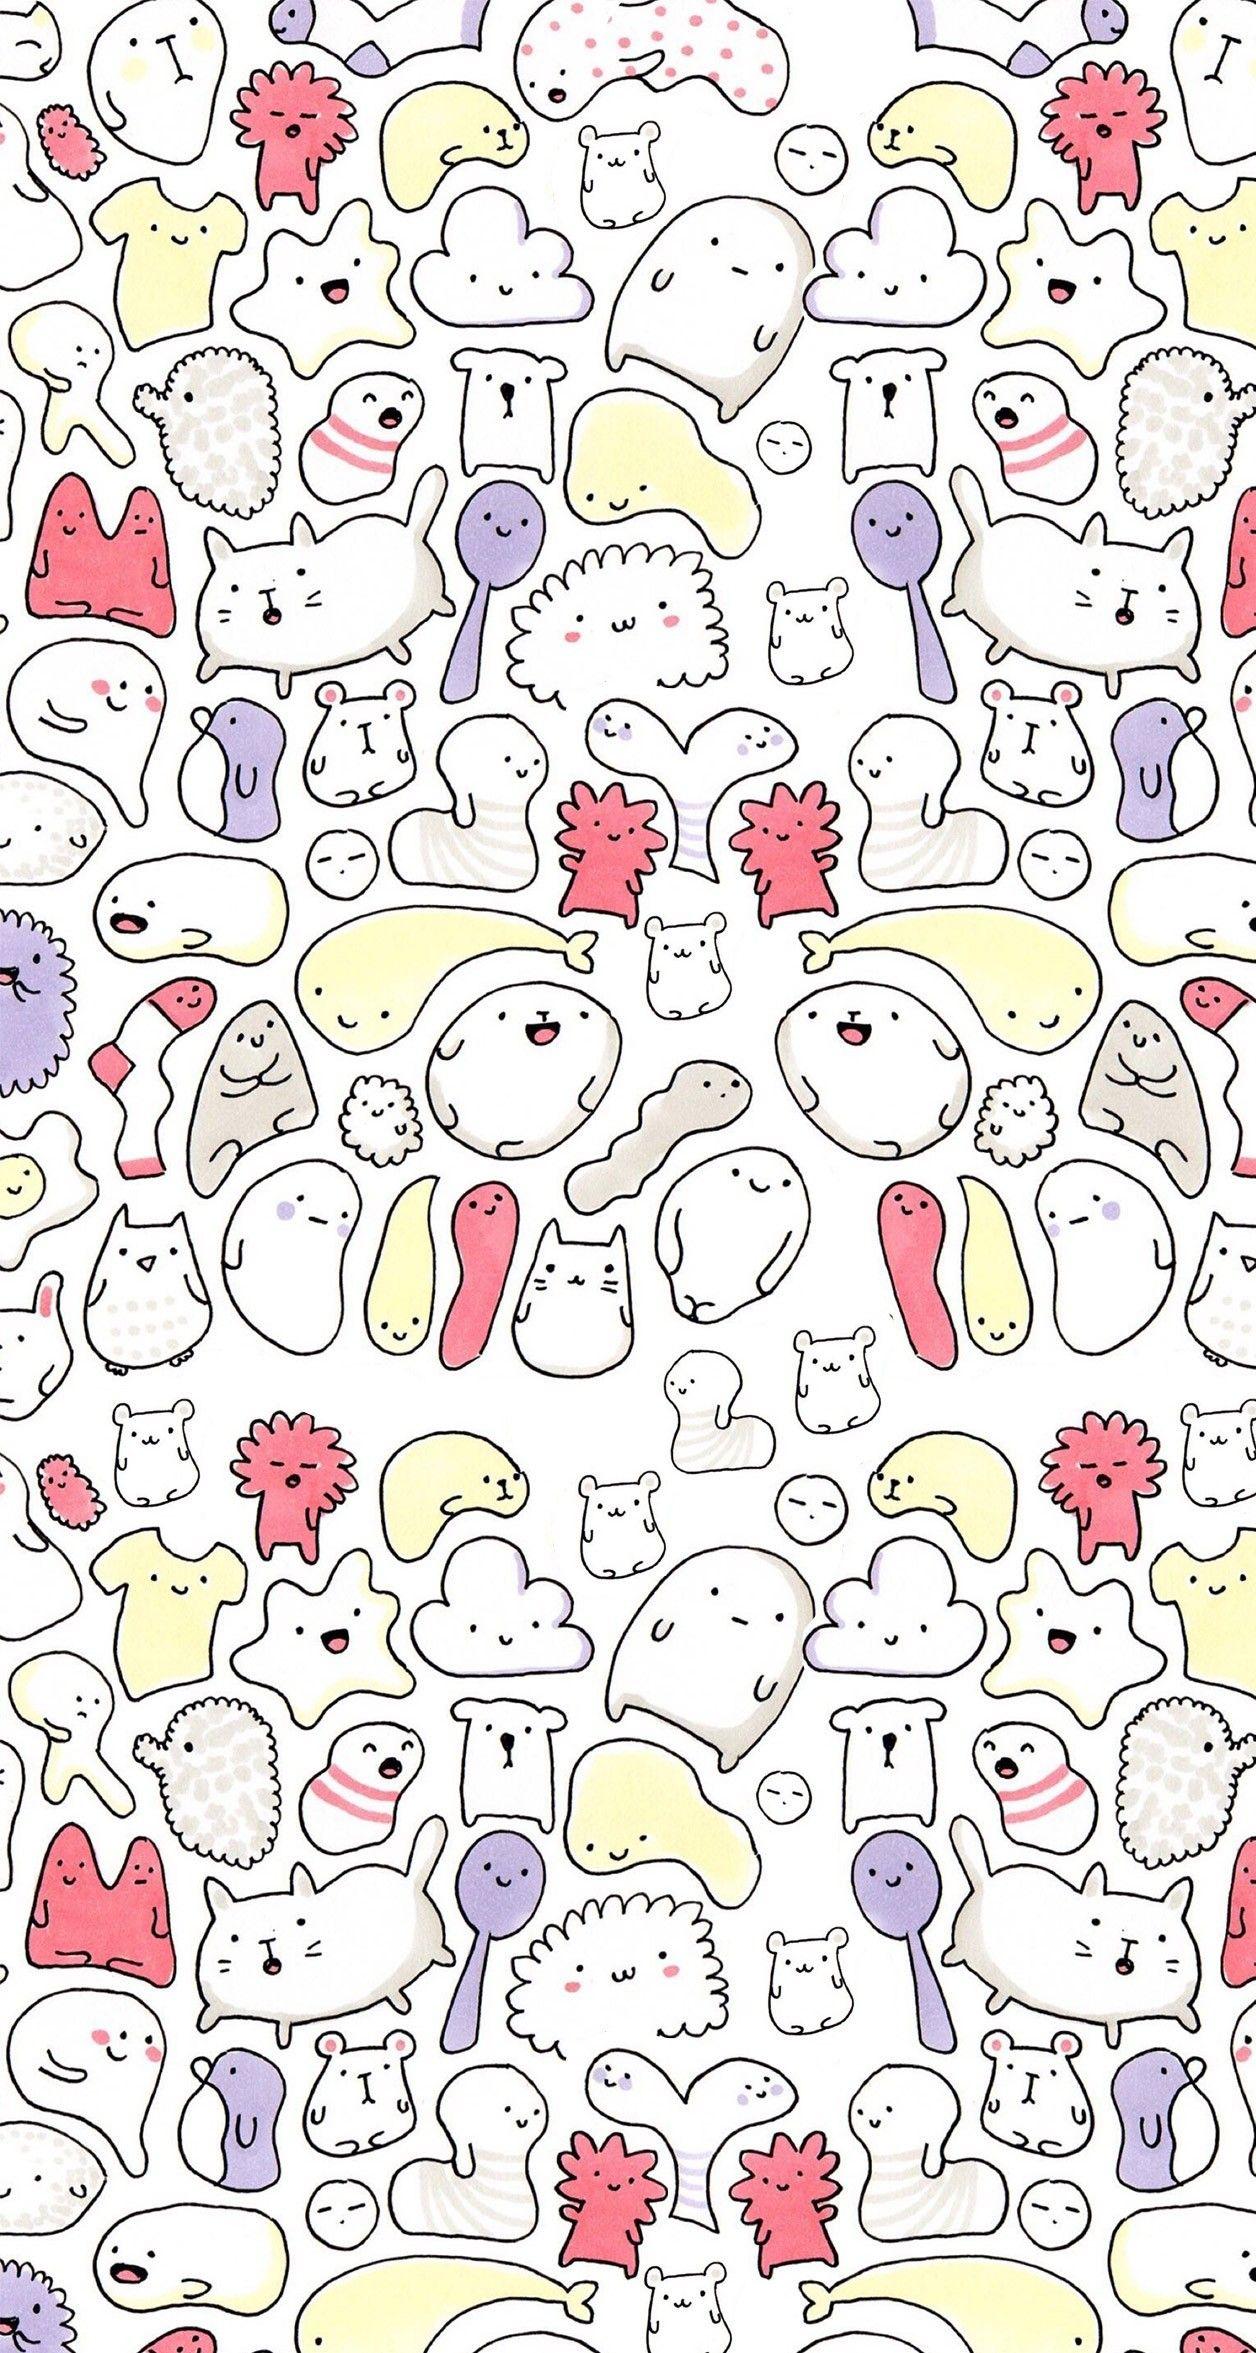 Doodle Cute Wallpapers - Wallpaper Cave